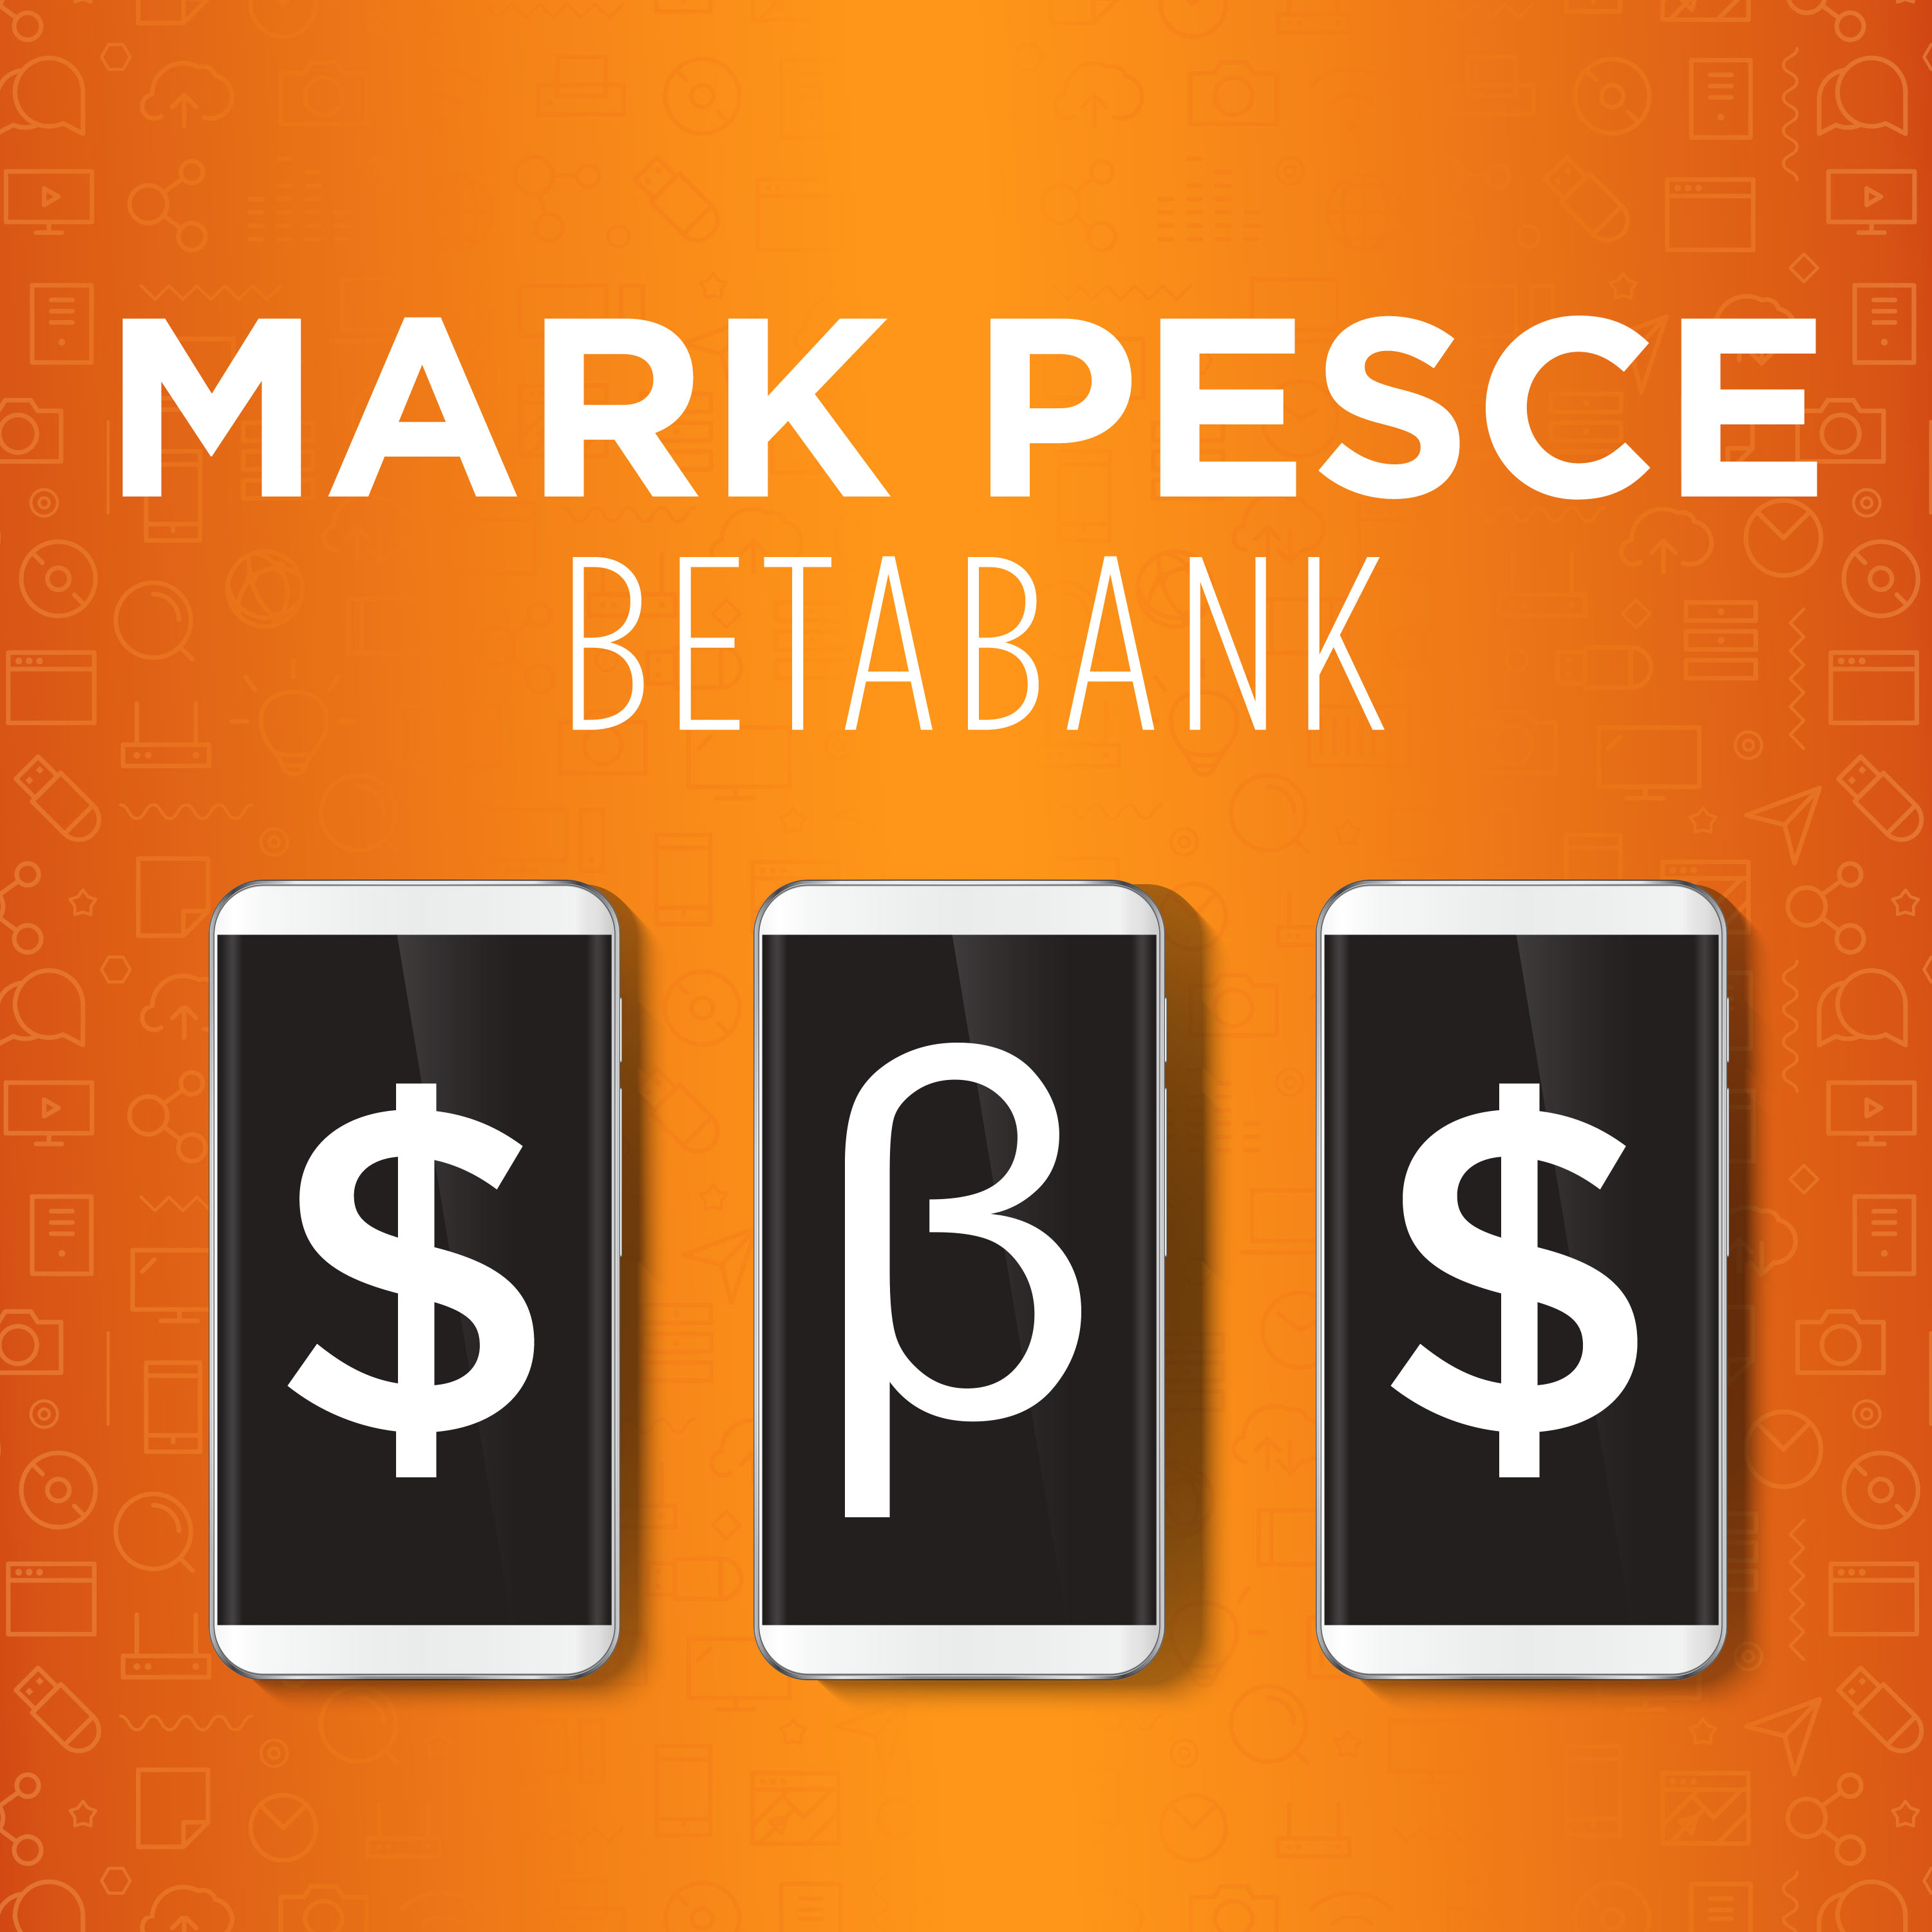 Betabank - The World's Bank